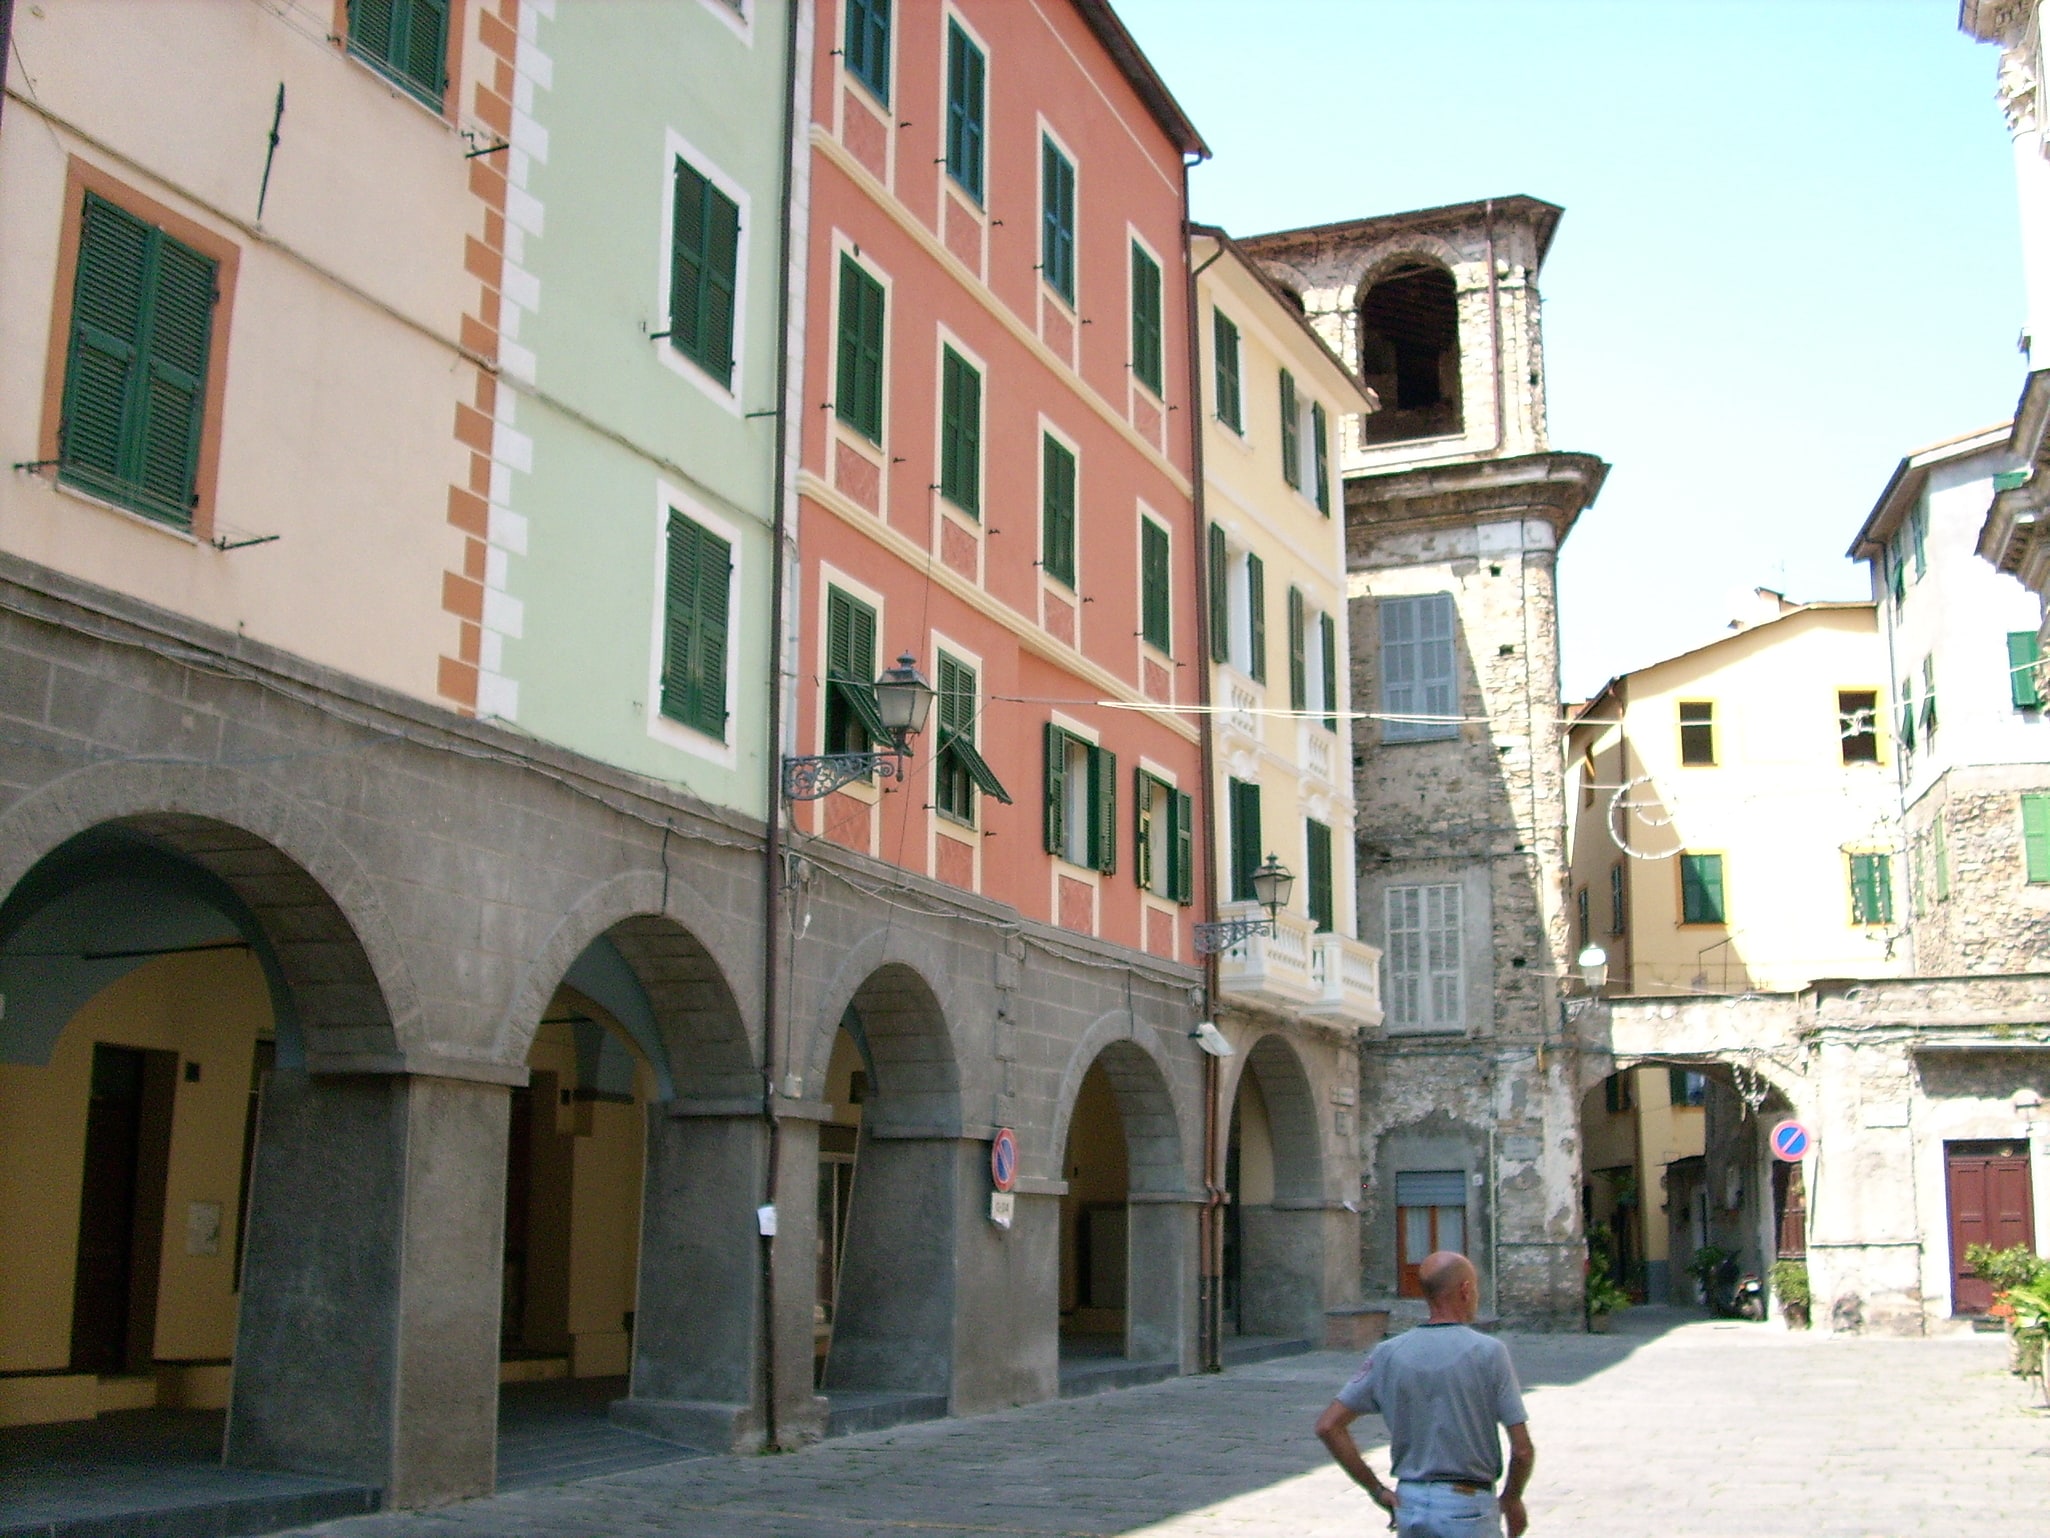 Badalucco, Italy